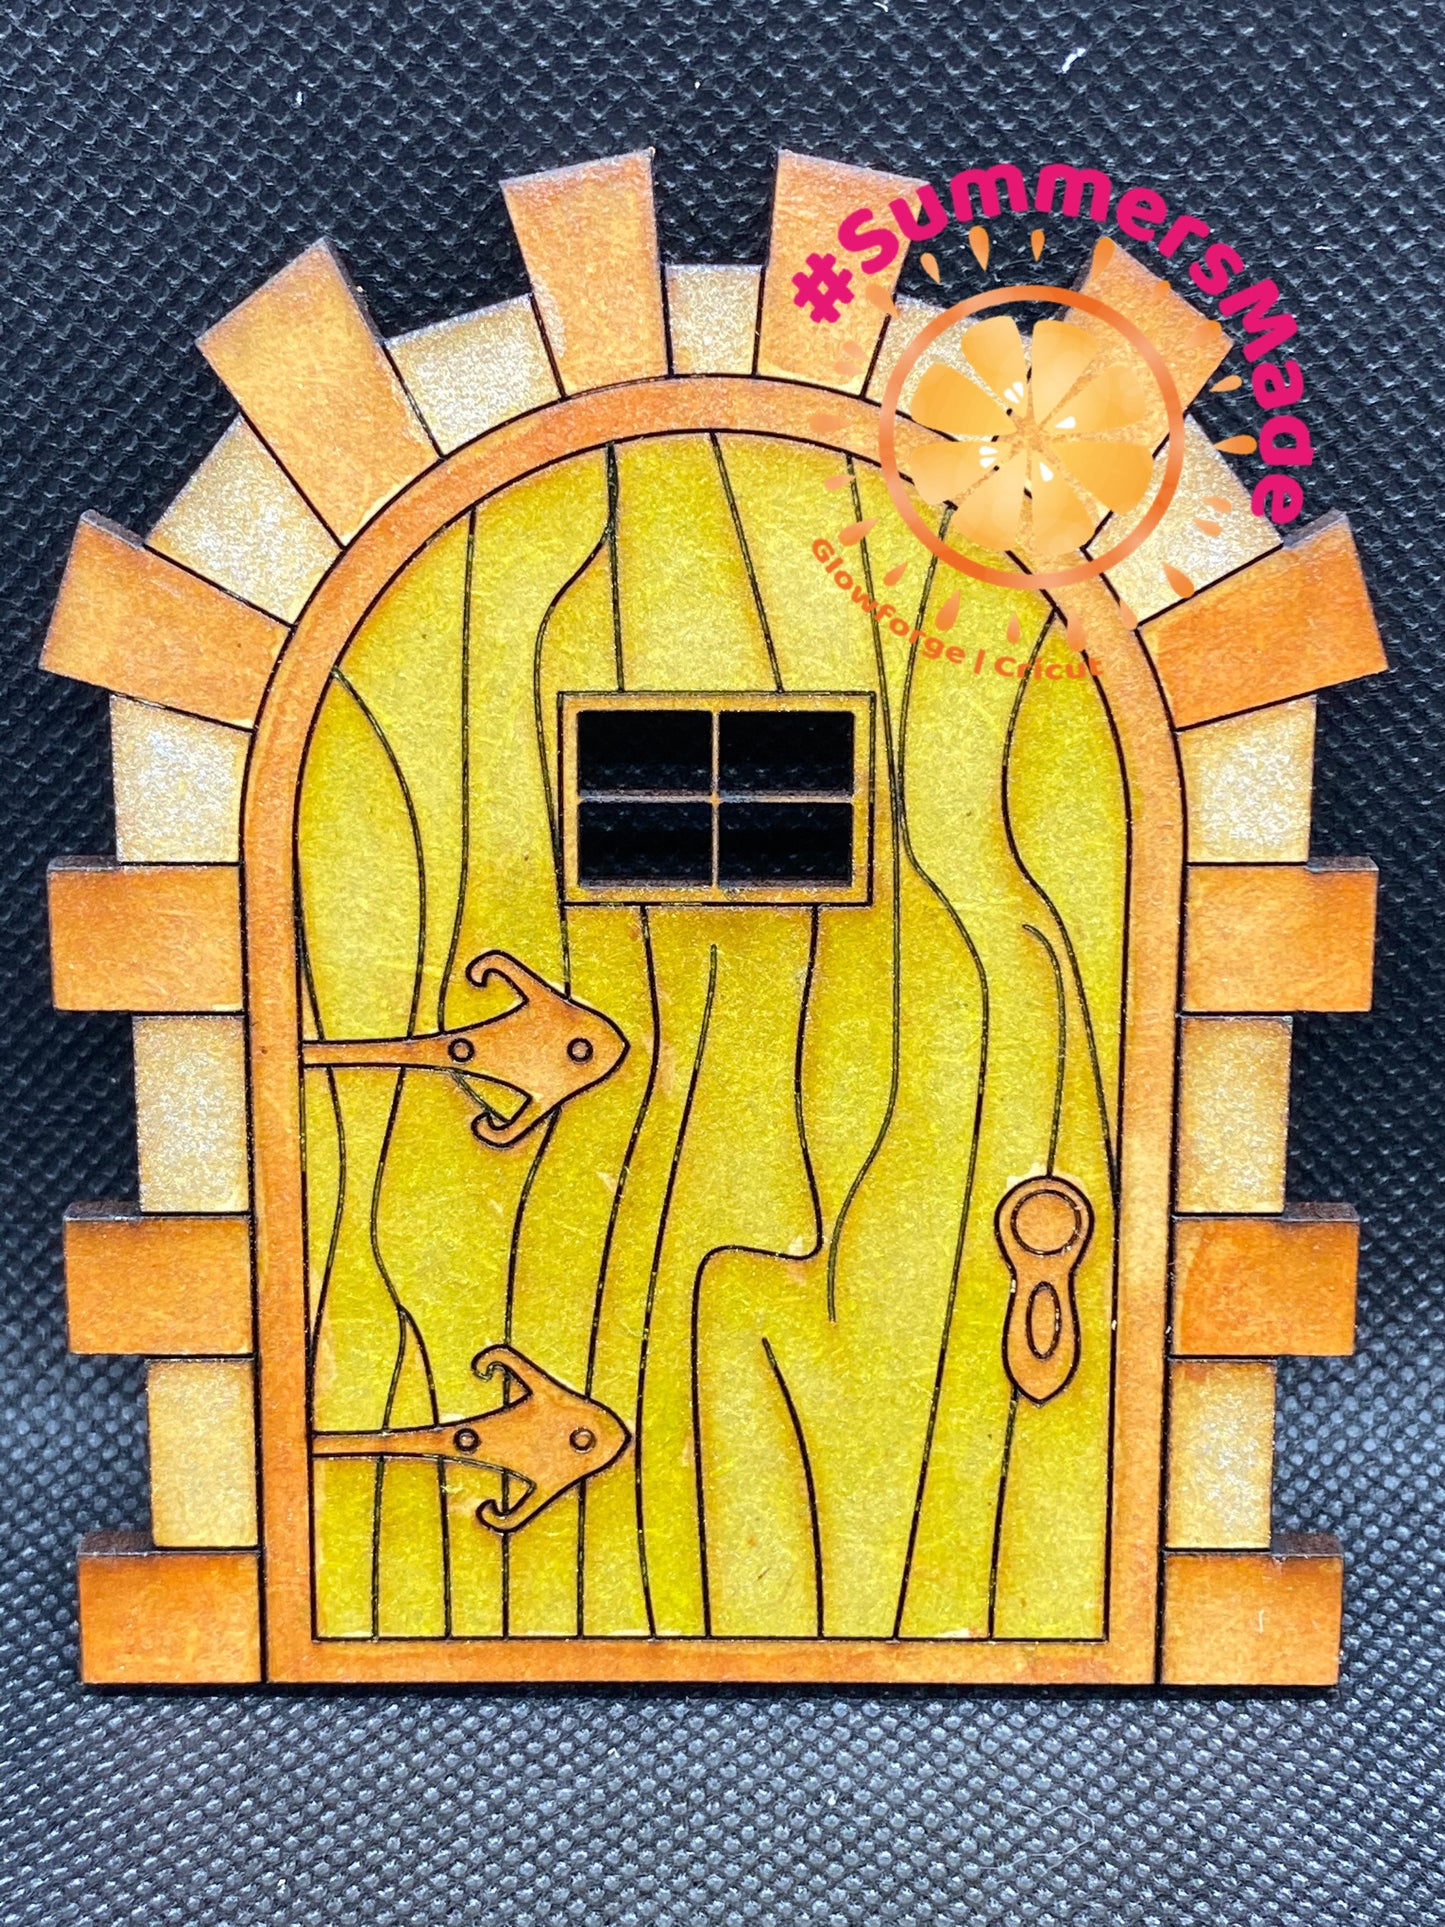 V3 - 6 Wooden Fairy Doors Volume Three - 6 Fairy Doors to decorate